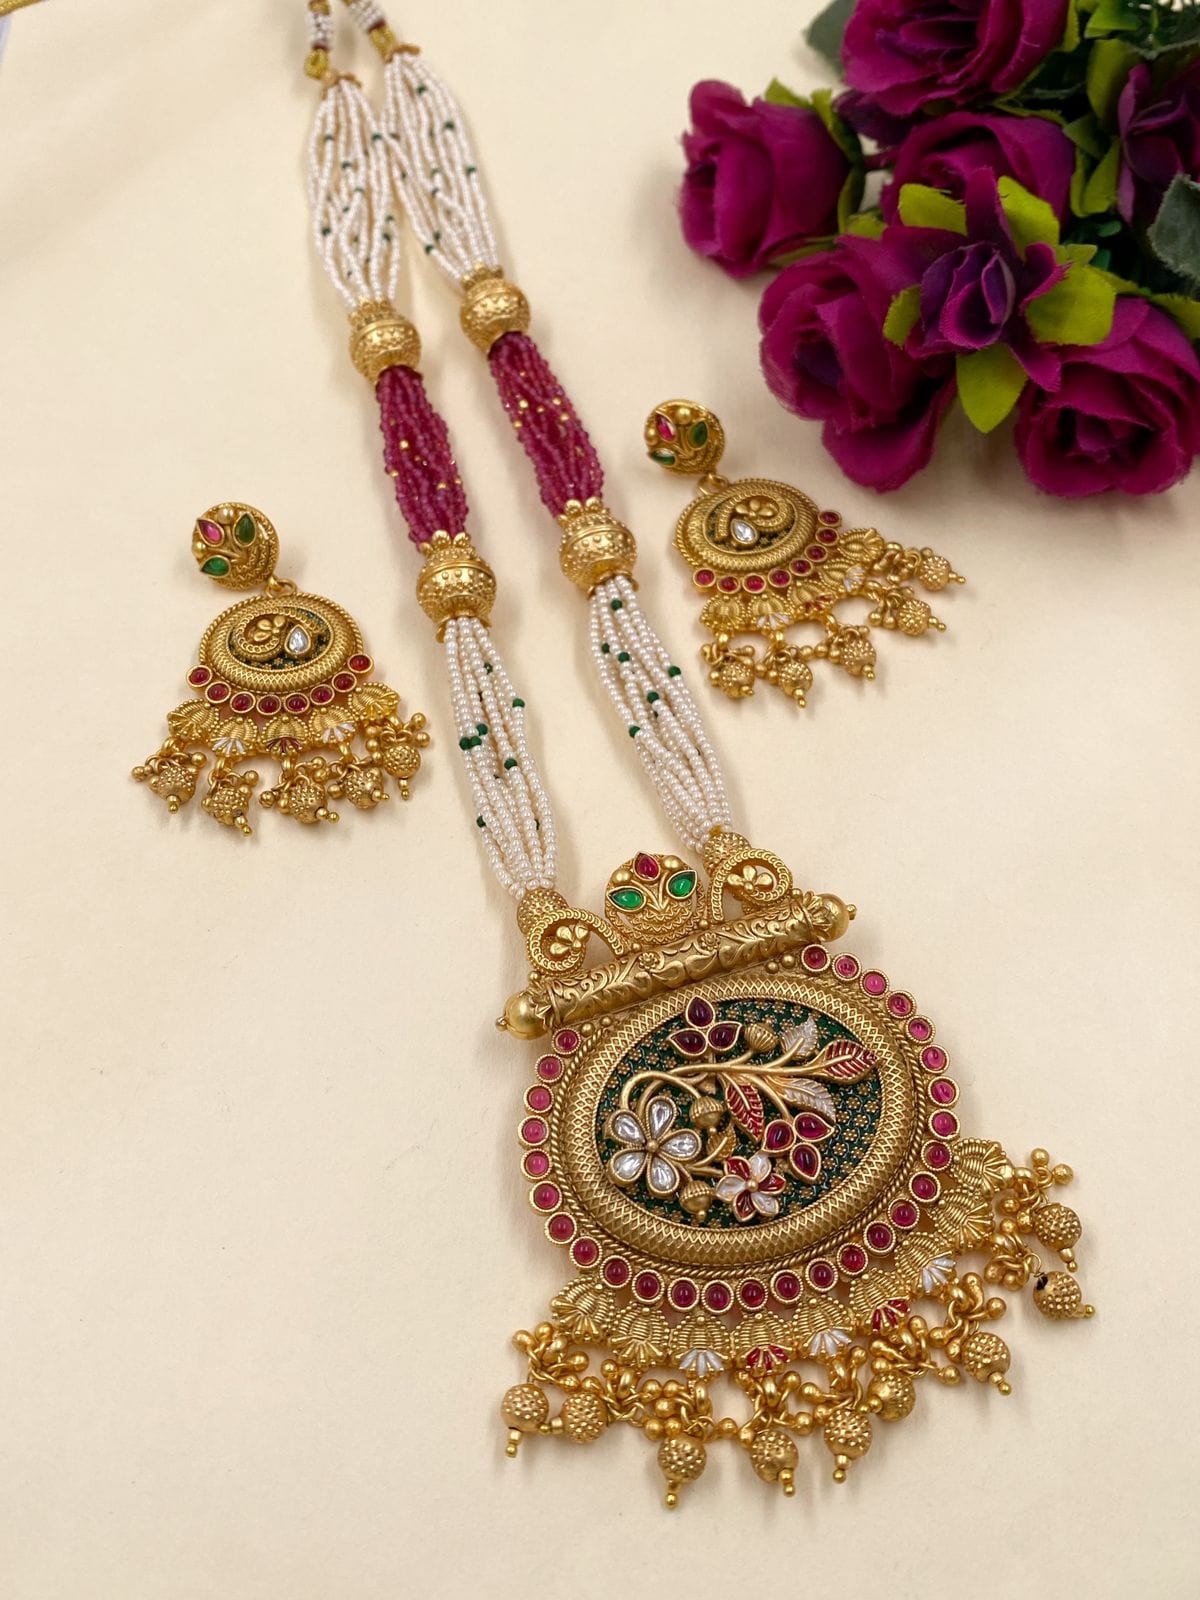 Designer Antique Golden Pendant Necklace Set With Pearls By Gehna Shop Antique Golden Necklace Sets